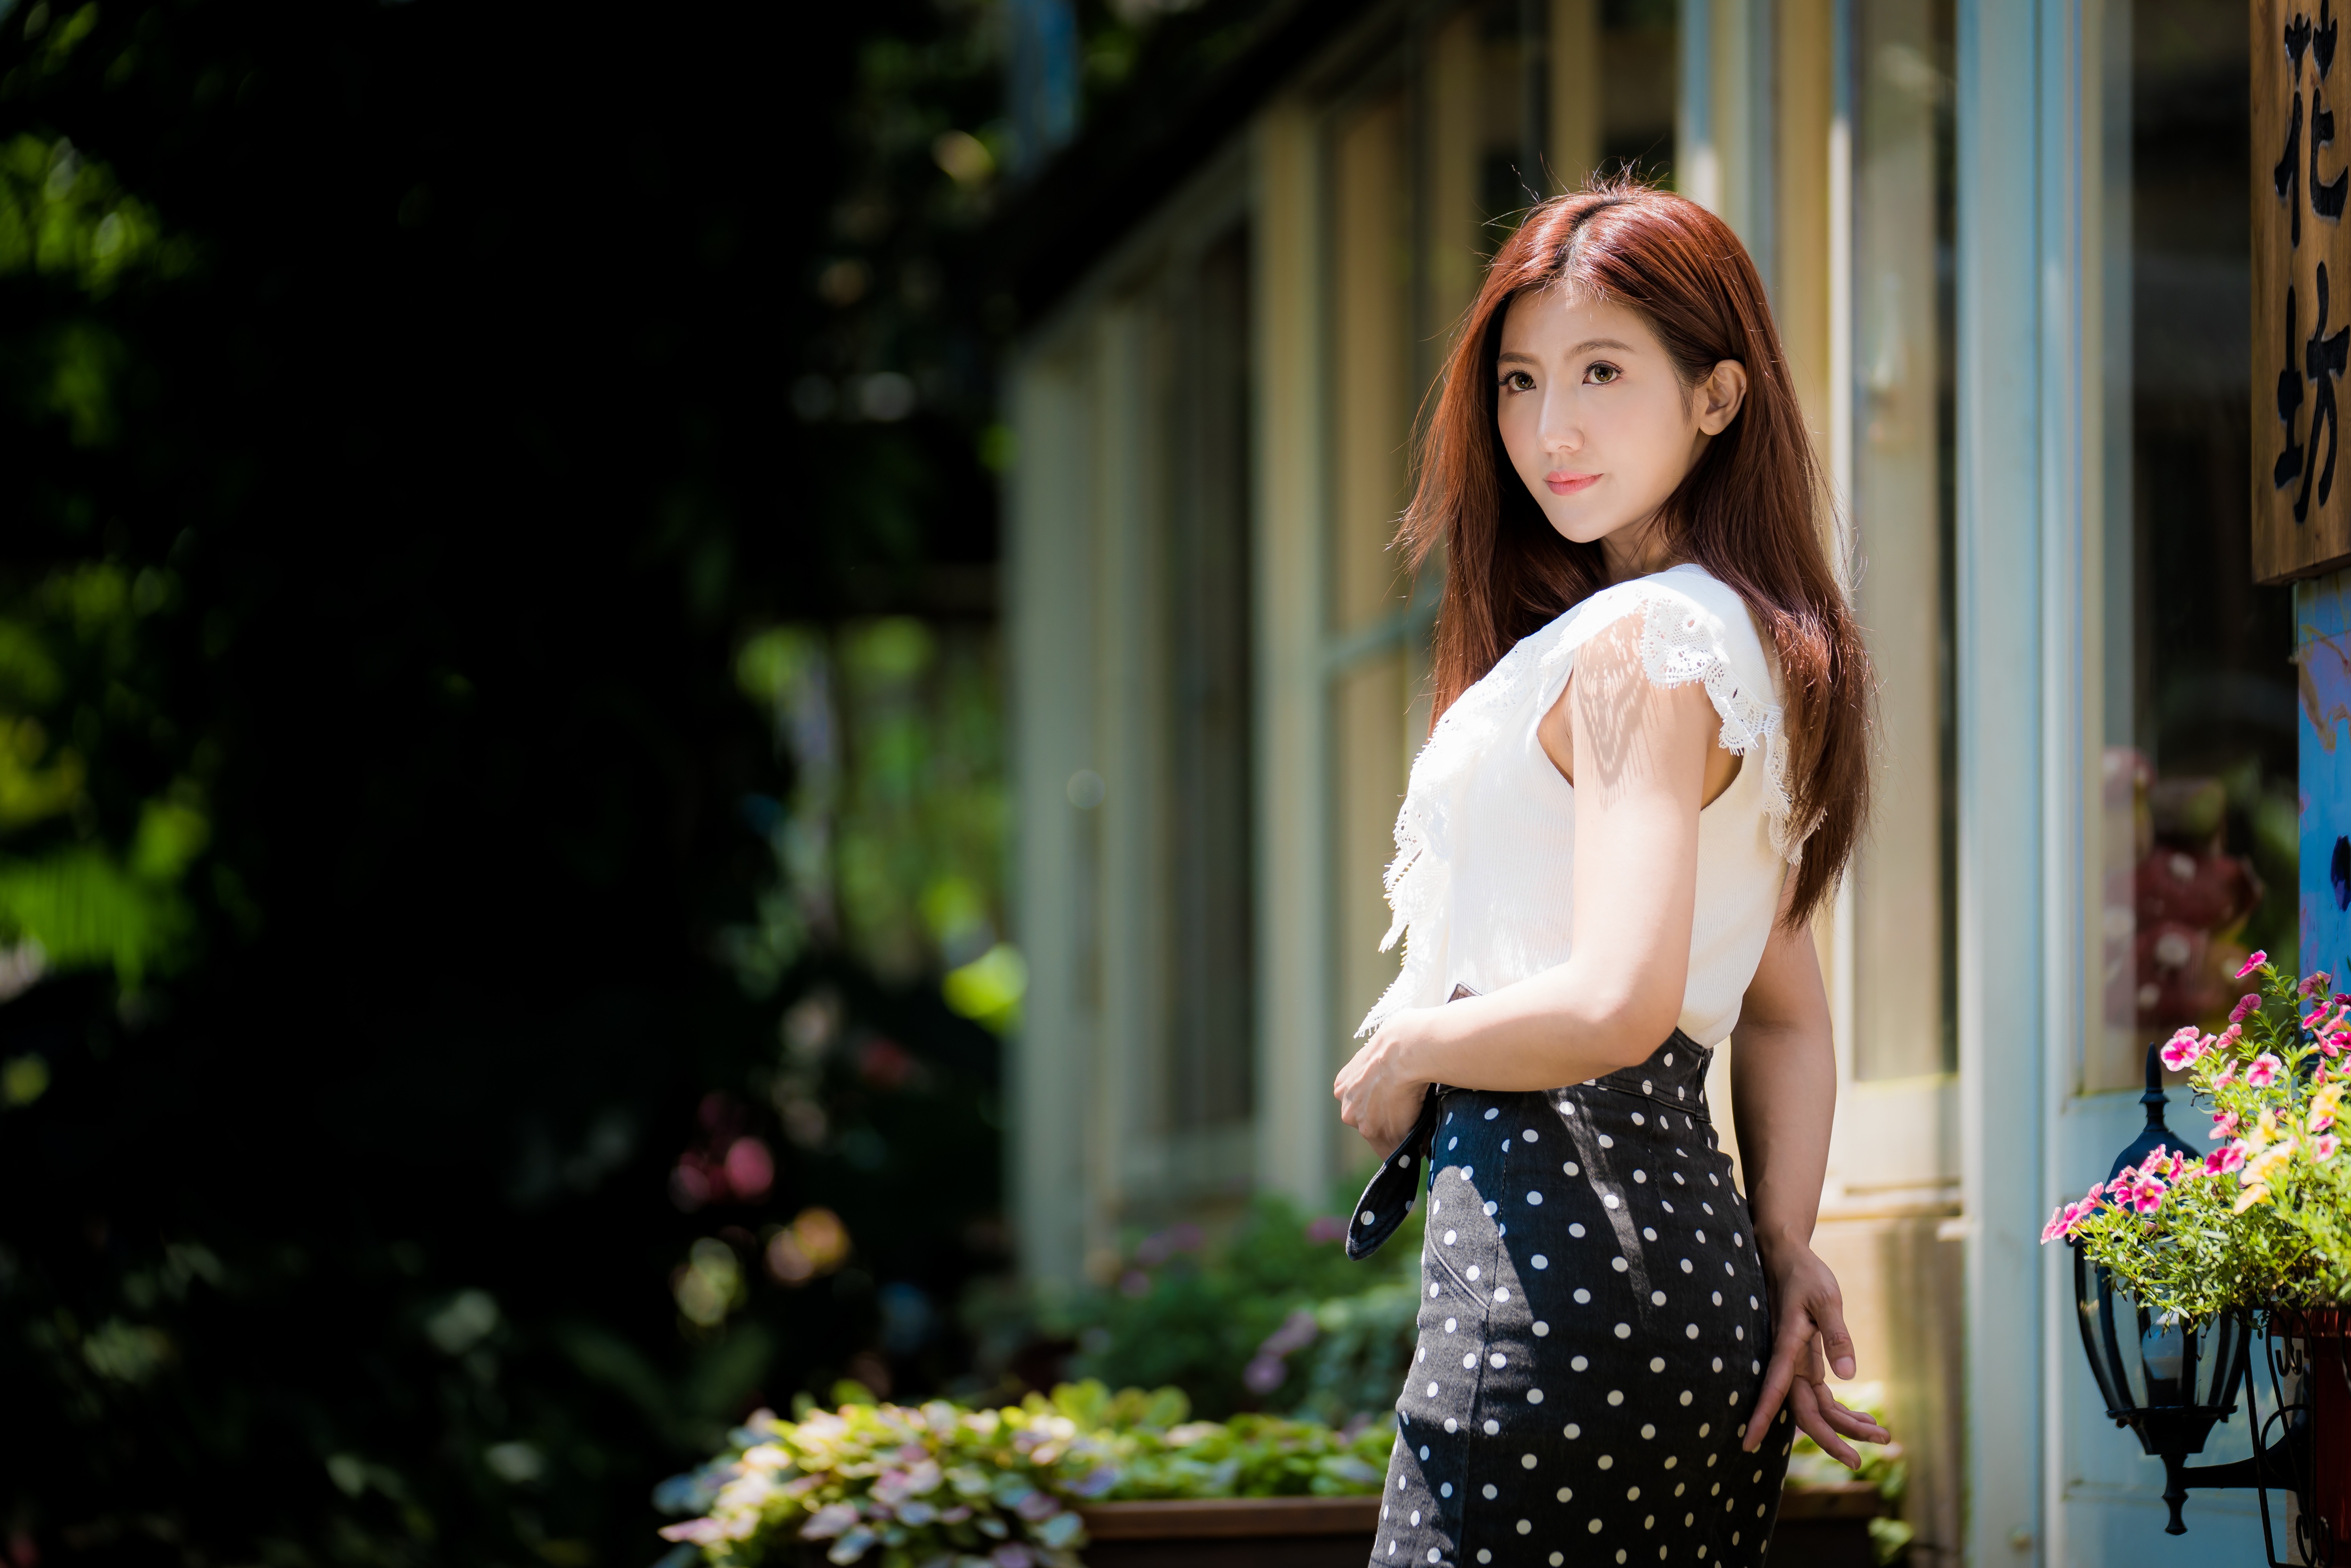 People 4562x3043 Asian model women long hair brunette depth of field white shirt skirt plants trees window